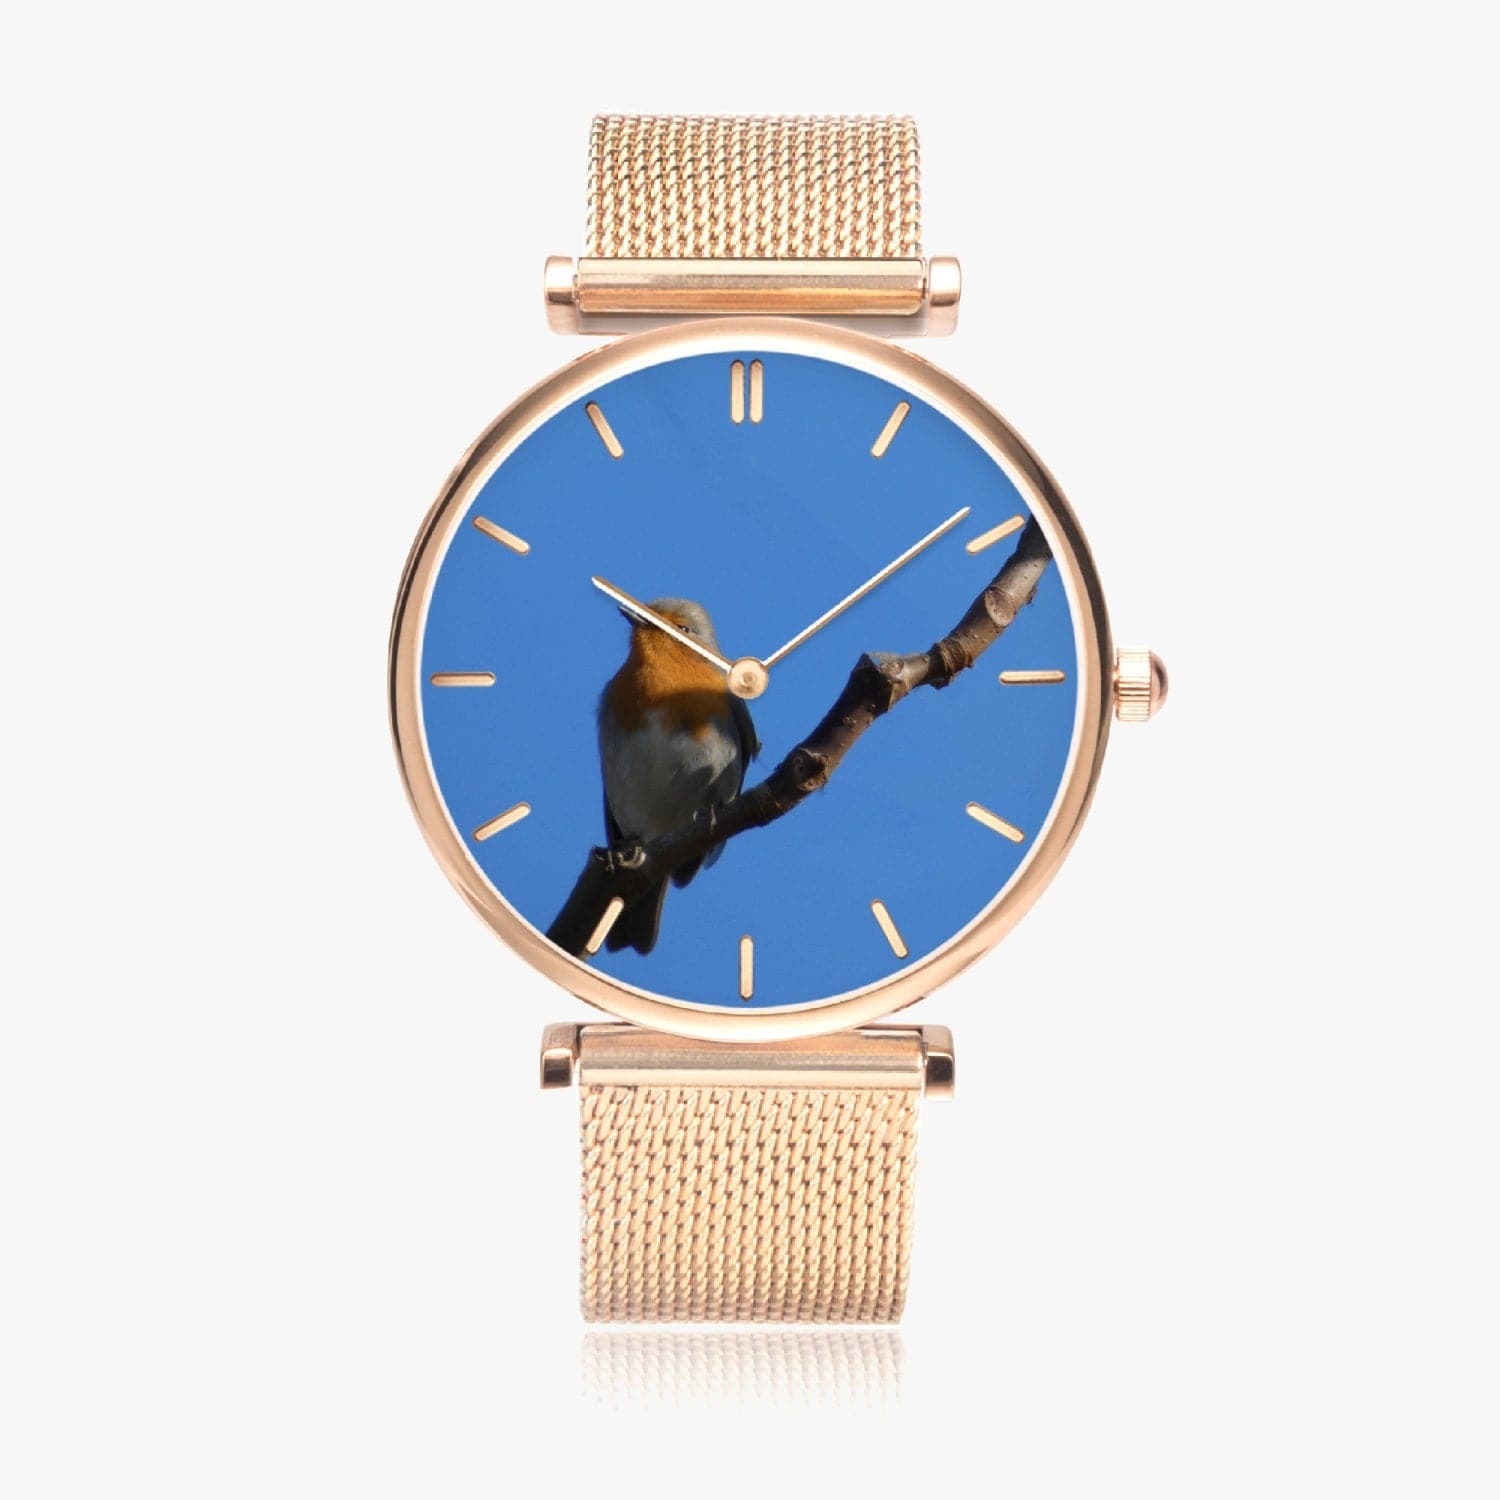 A Robin. New Stylish Ultra-Thin Quartz Watch. Designer watch by Sensus Studio Design